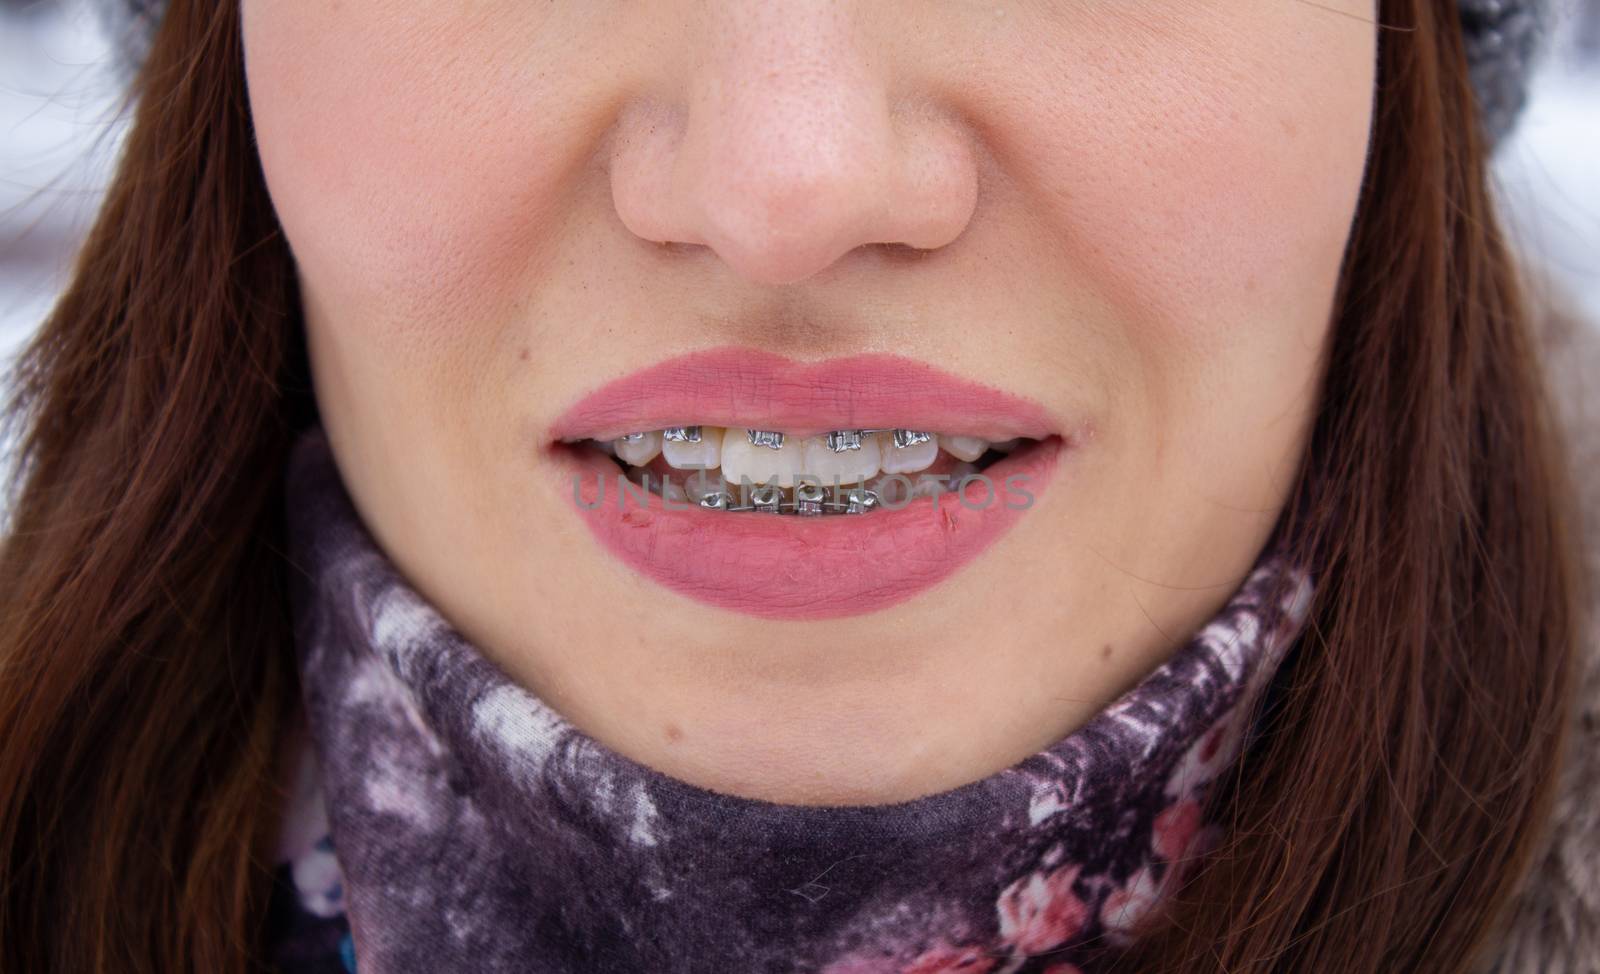 Braces on the girl's teeth, macro photo teeth, close-up lips,  by AnatoliiFoto